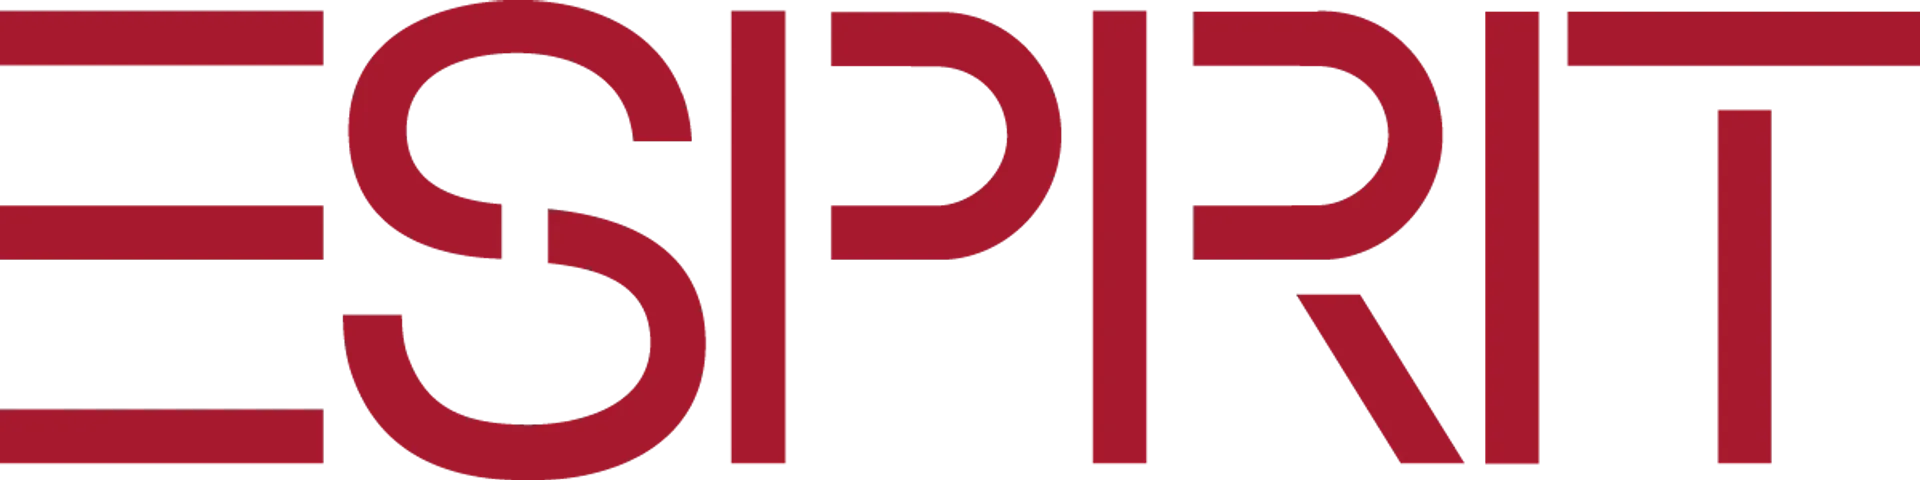 ESPRIT logo die aktuell Flugblatt